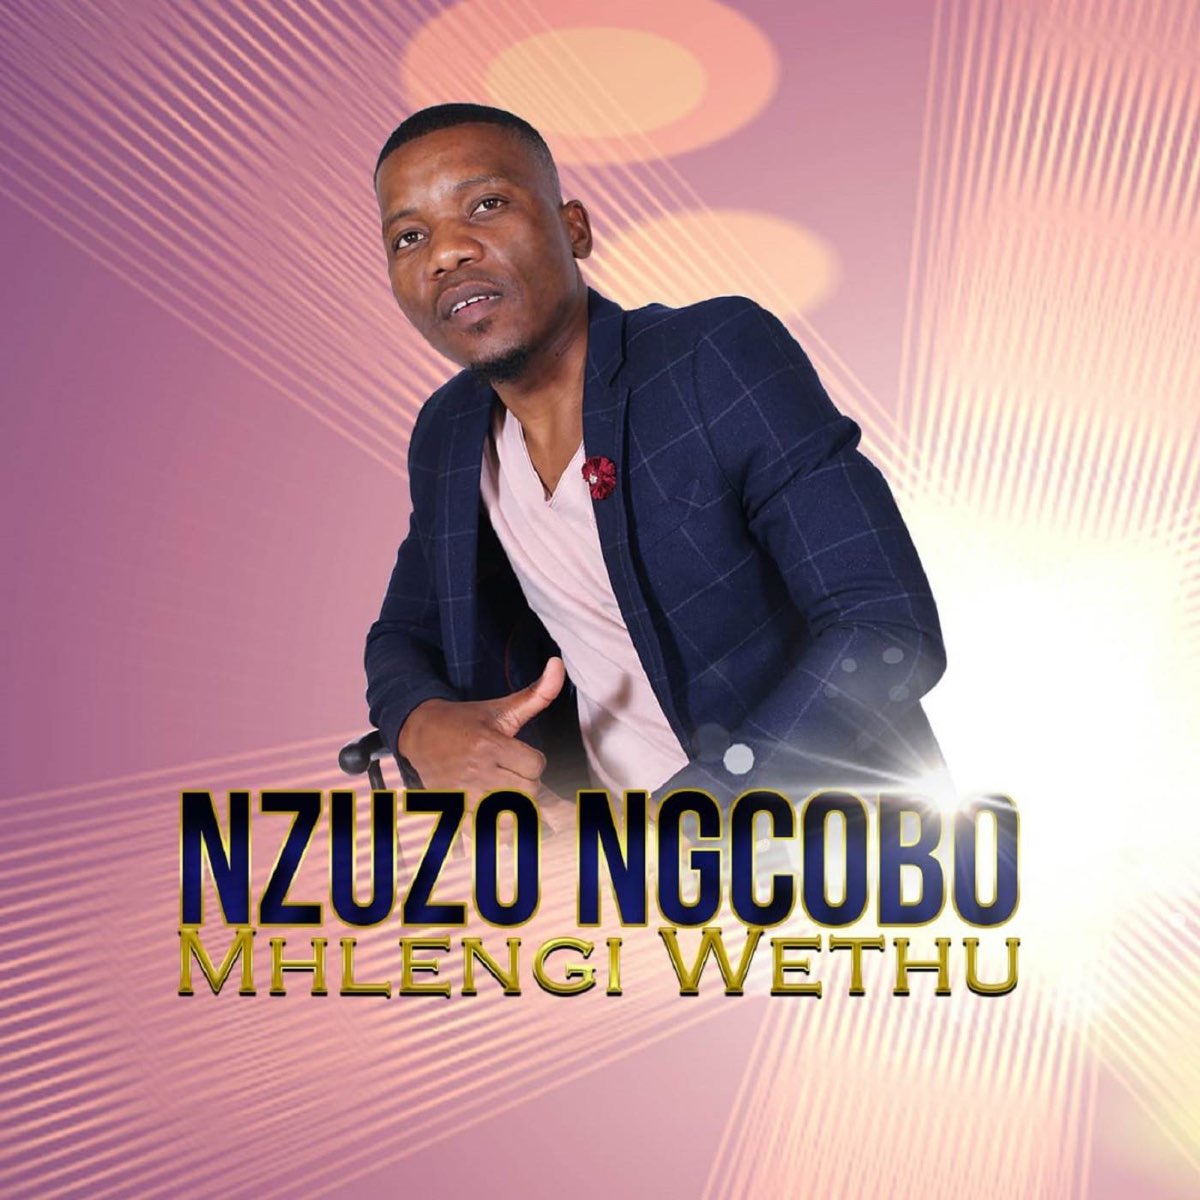 Mhlengi Wethu - Single by Nzuzo Ngcobo on Apple Music